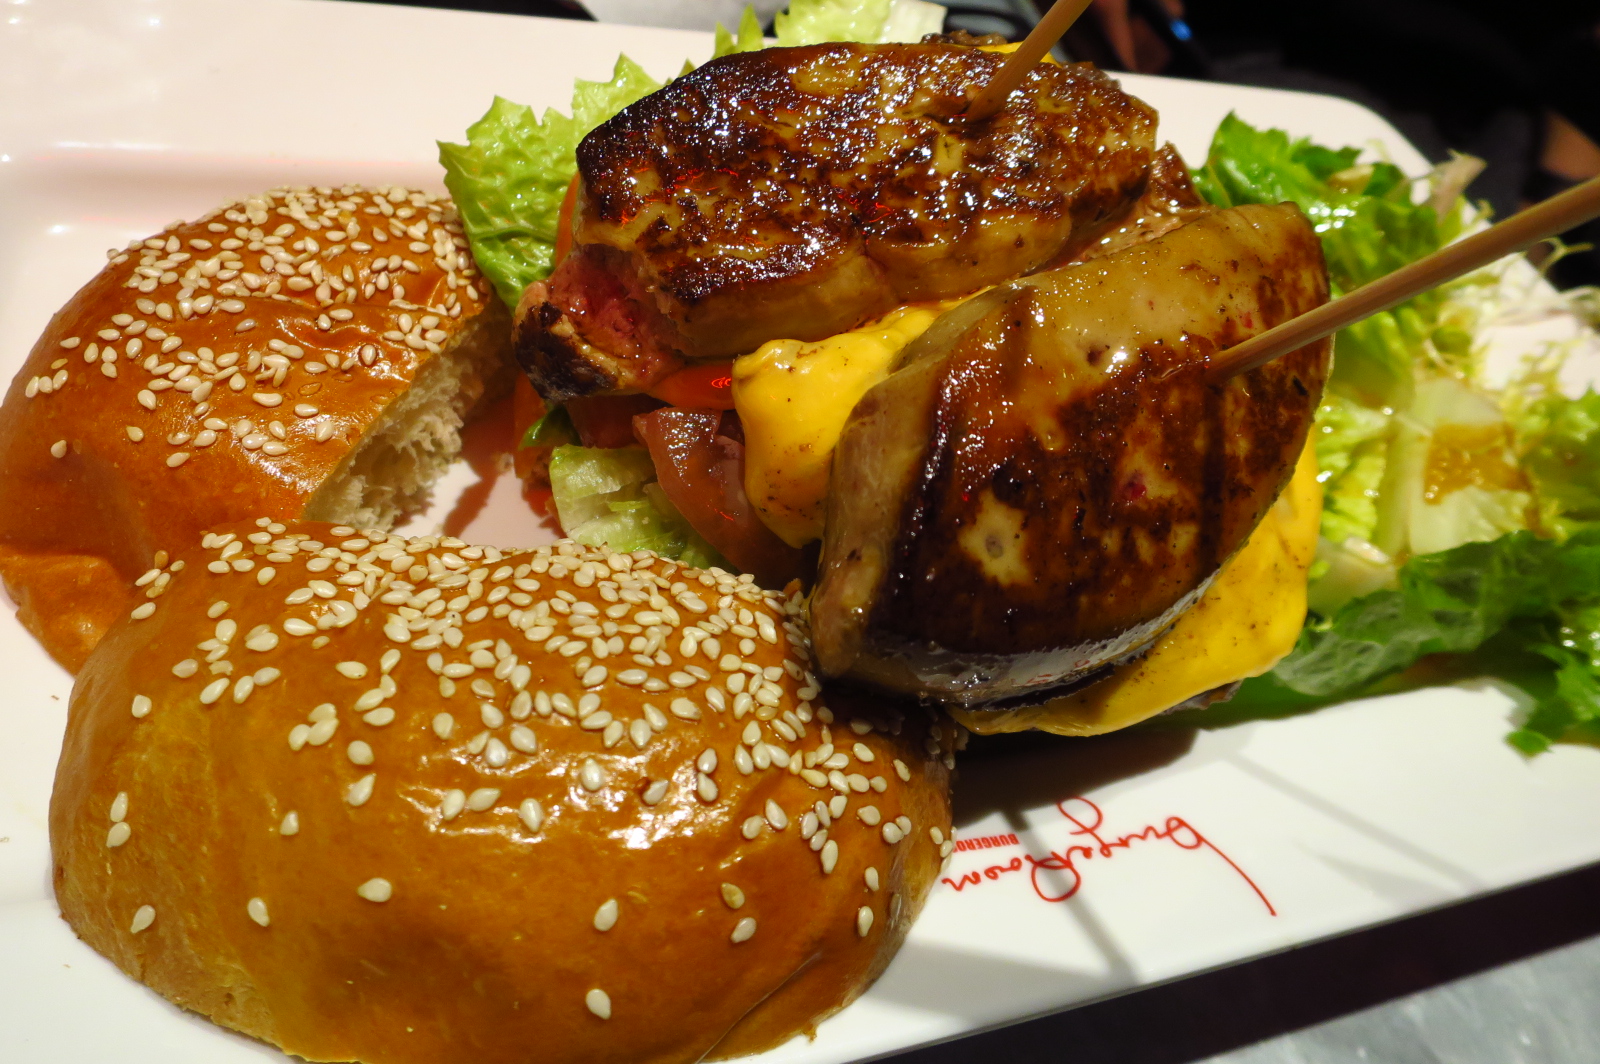 burgeroom_double%2Bfoie%2Bgras%2Bburger.JPG